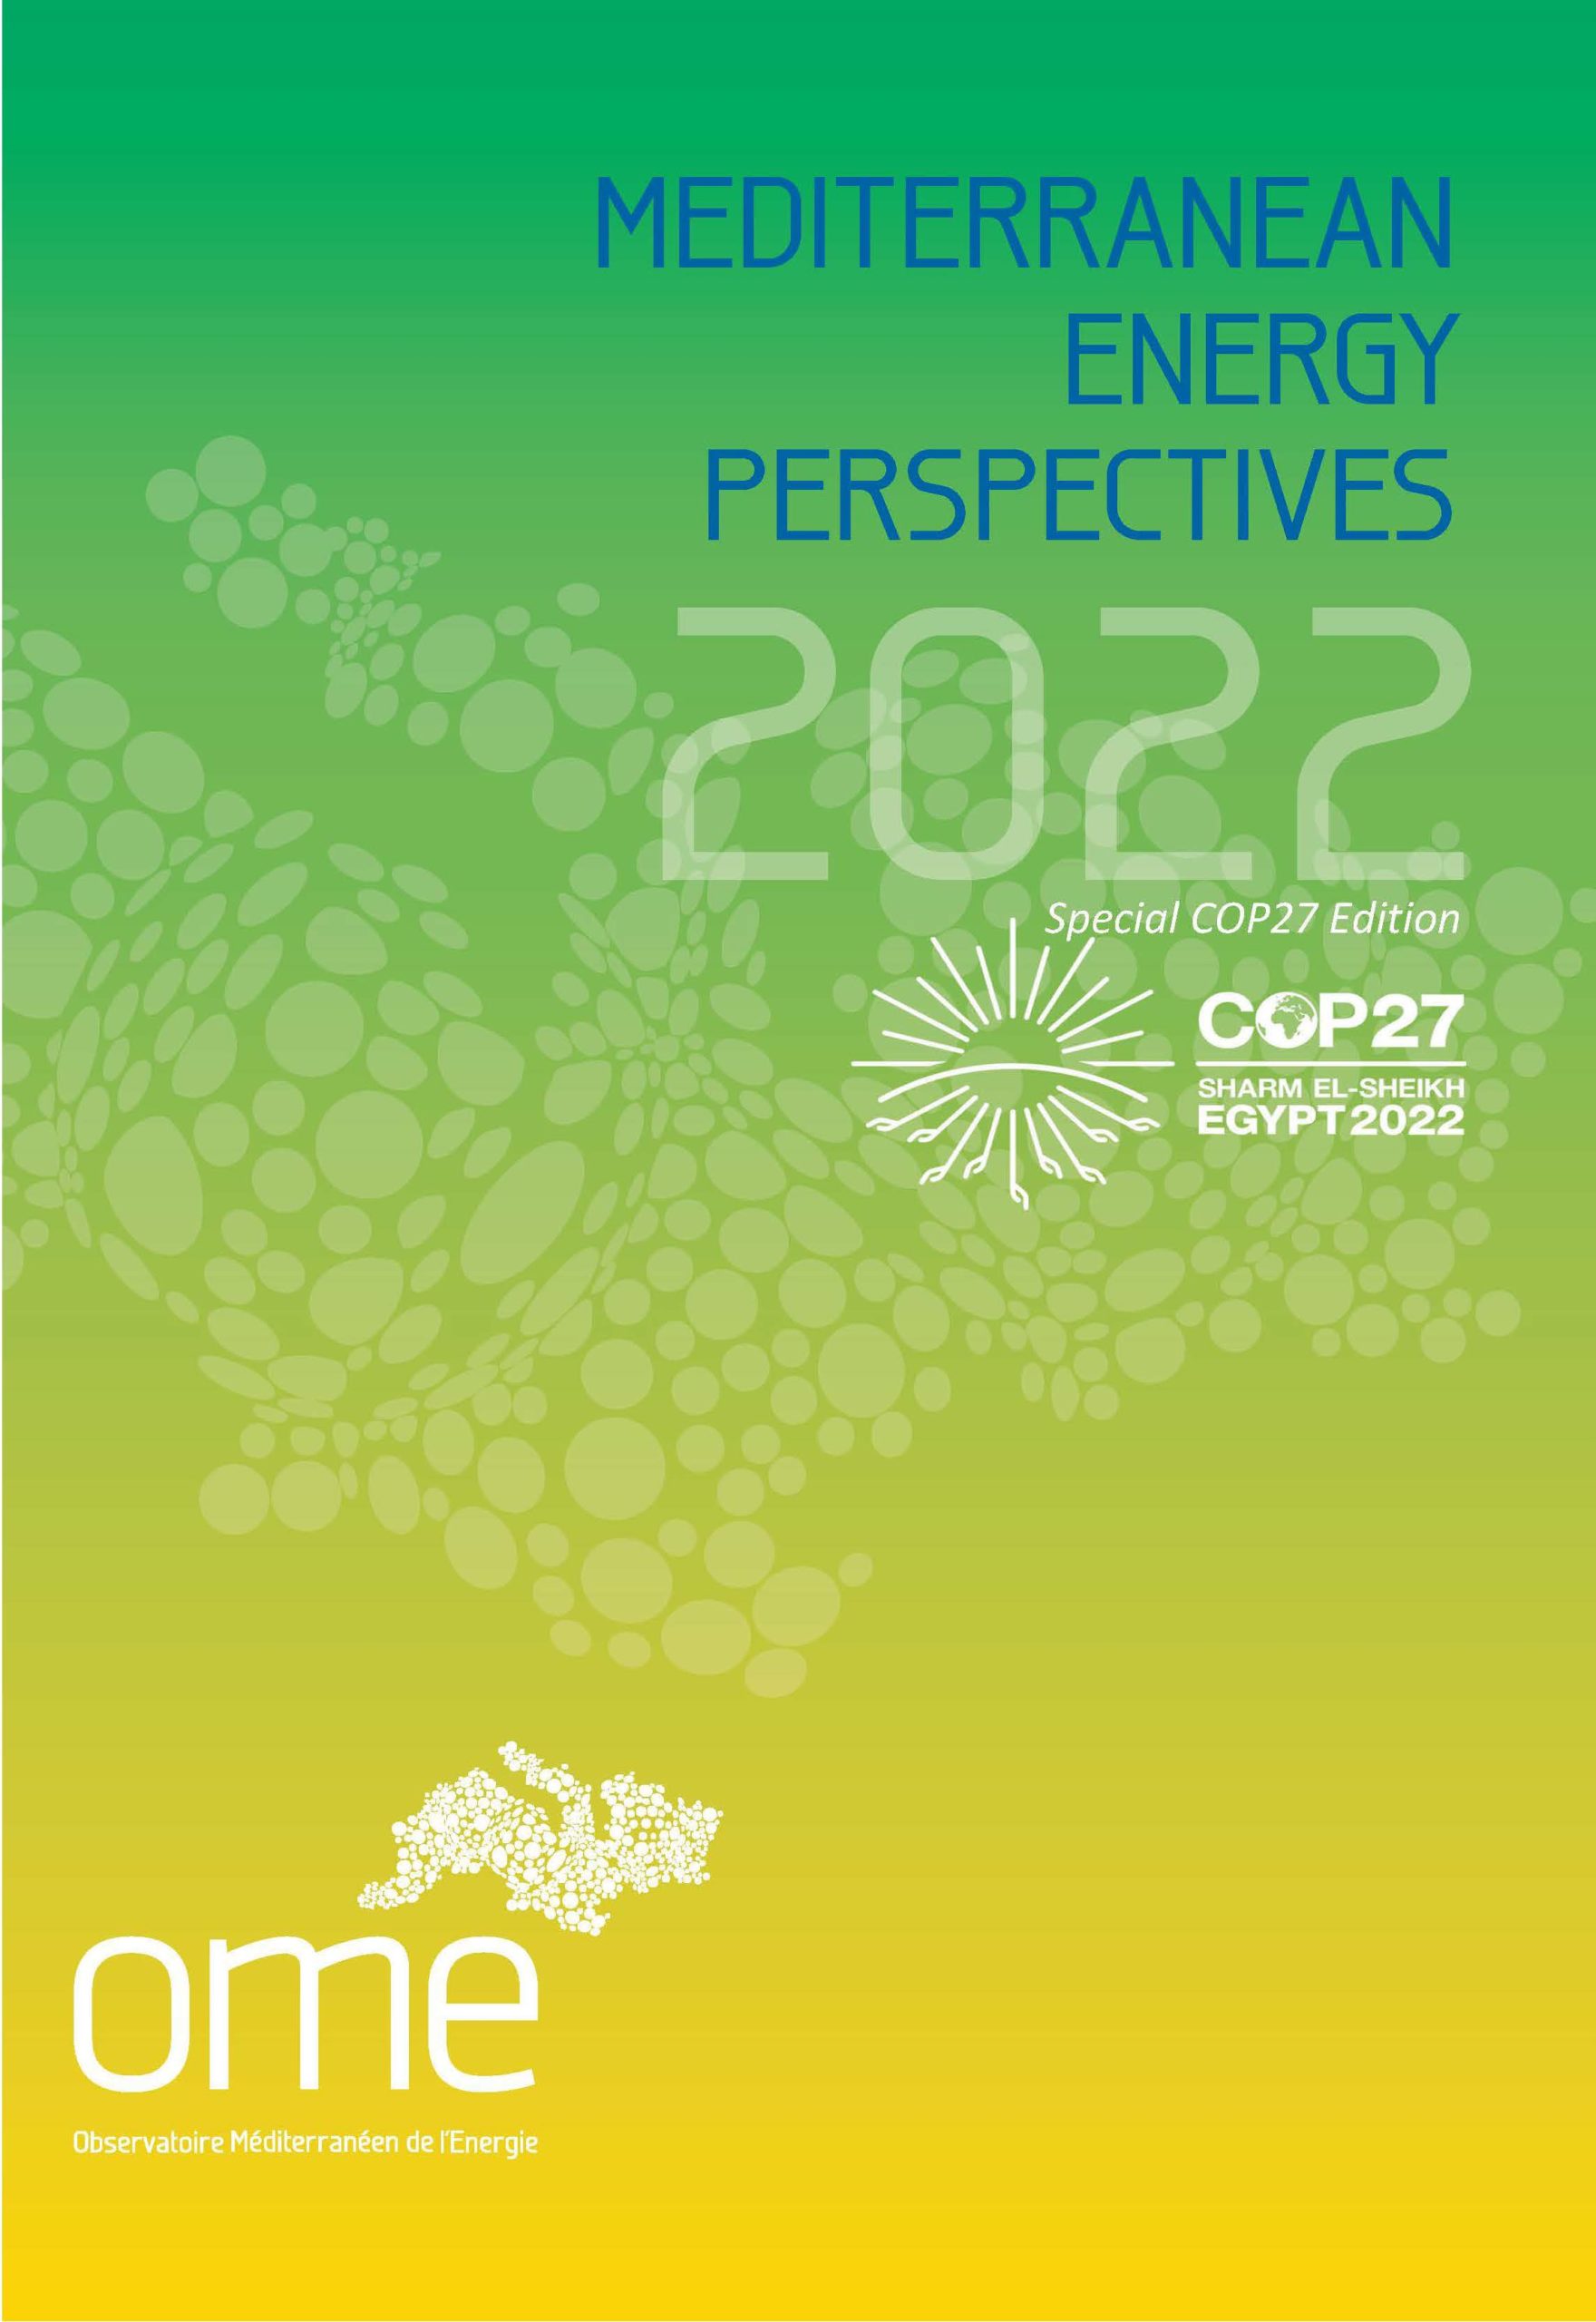 MEP 2022 – Special COP27 edition (released in December 2022)